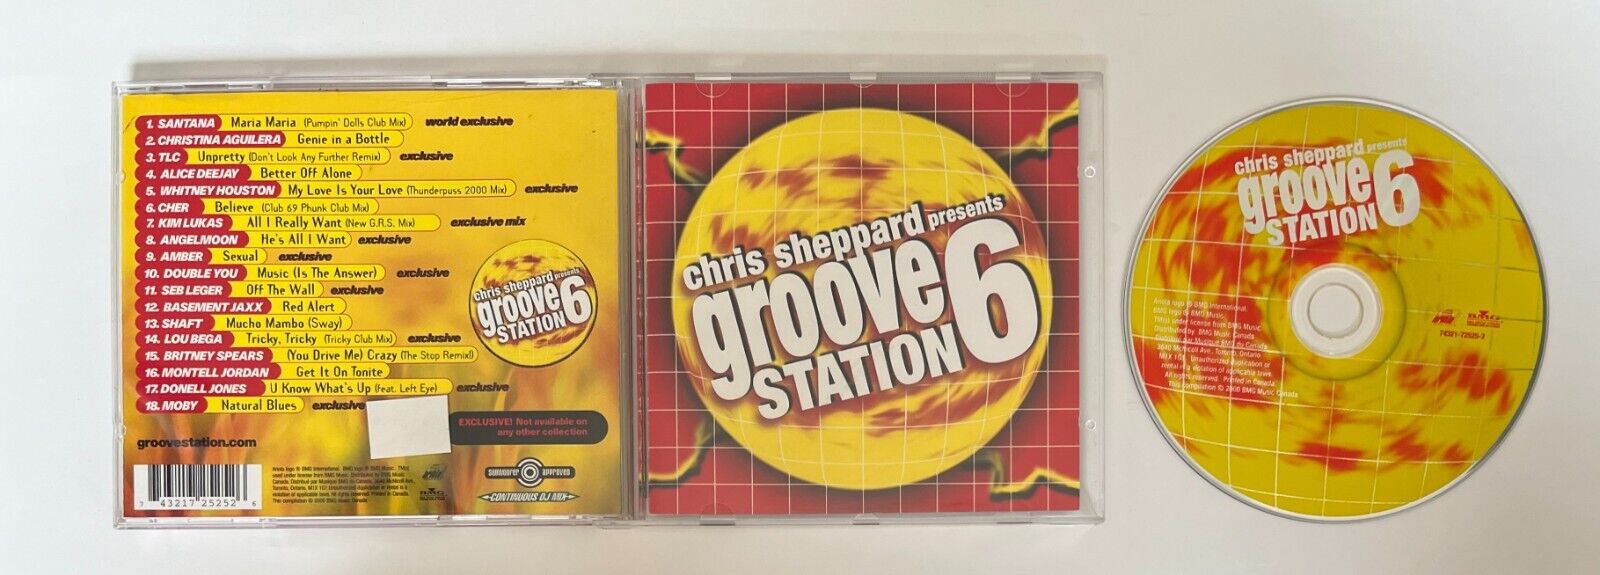 Chris Sheppard – Chris Sheppard Presents Groove Station 6 (74321-72525-2) CD